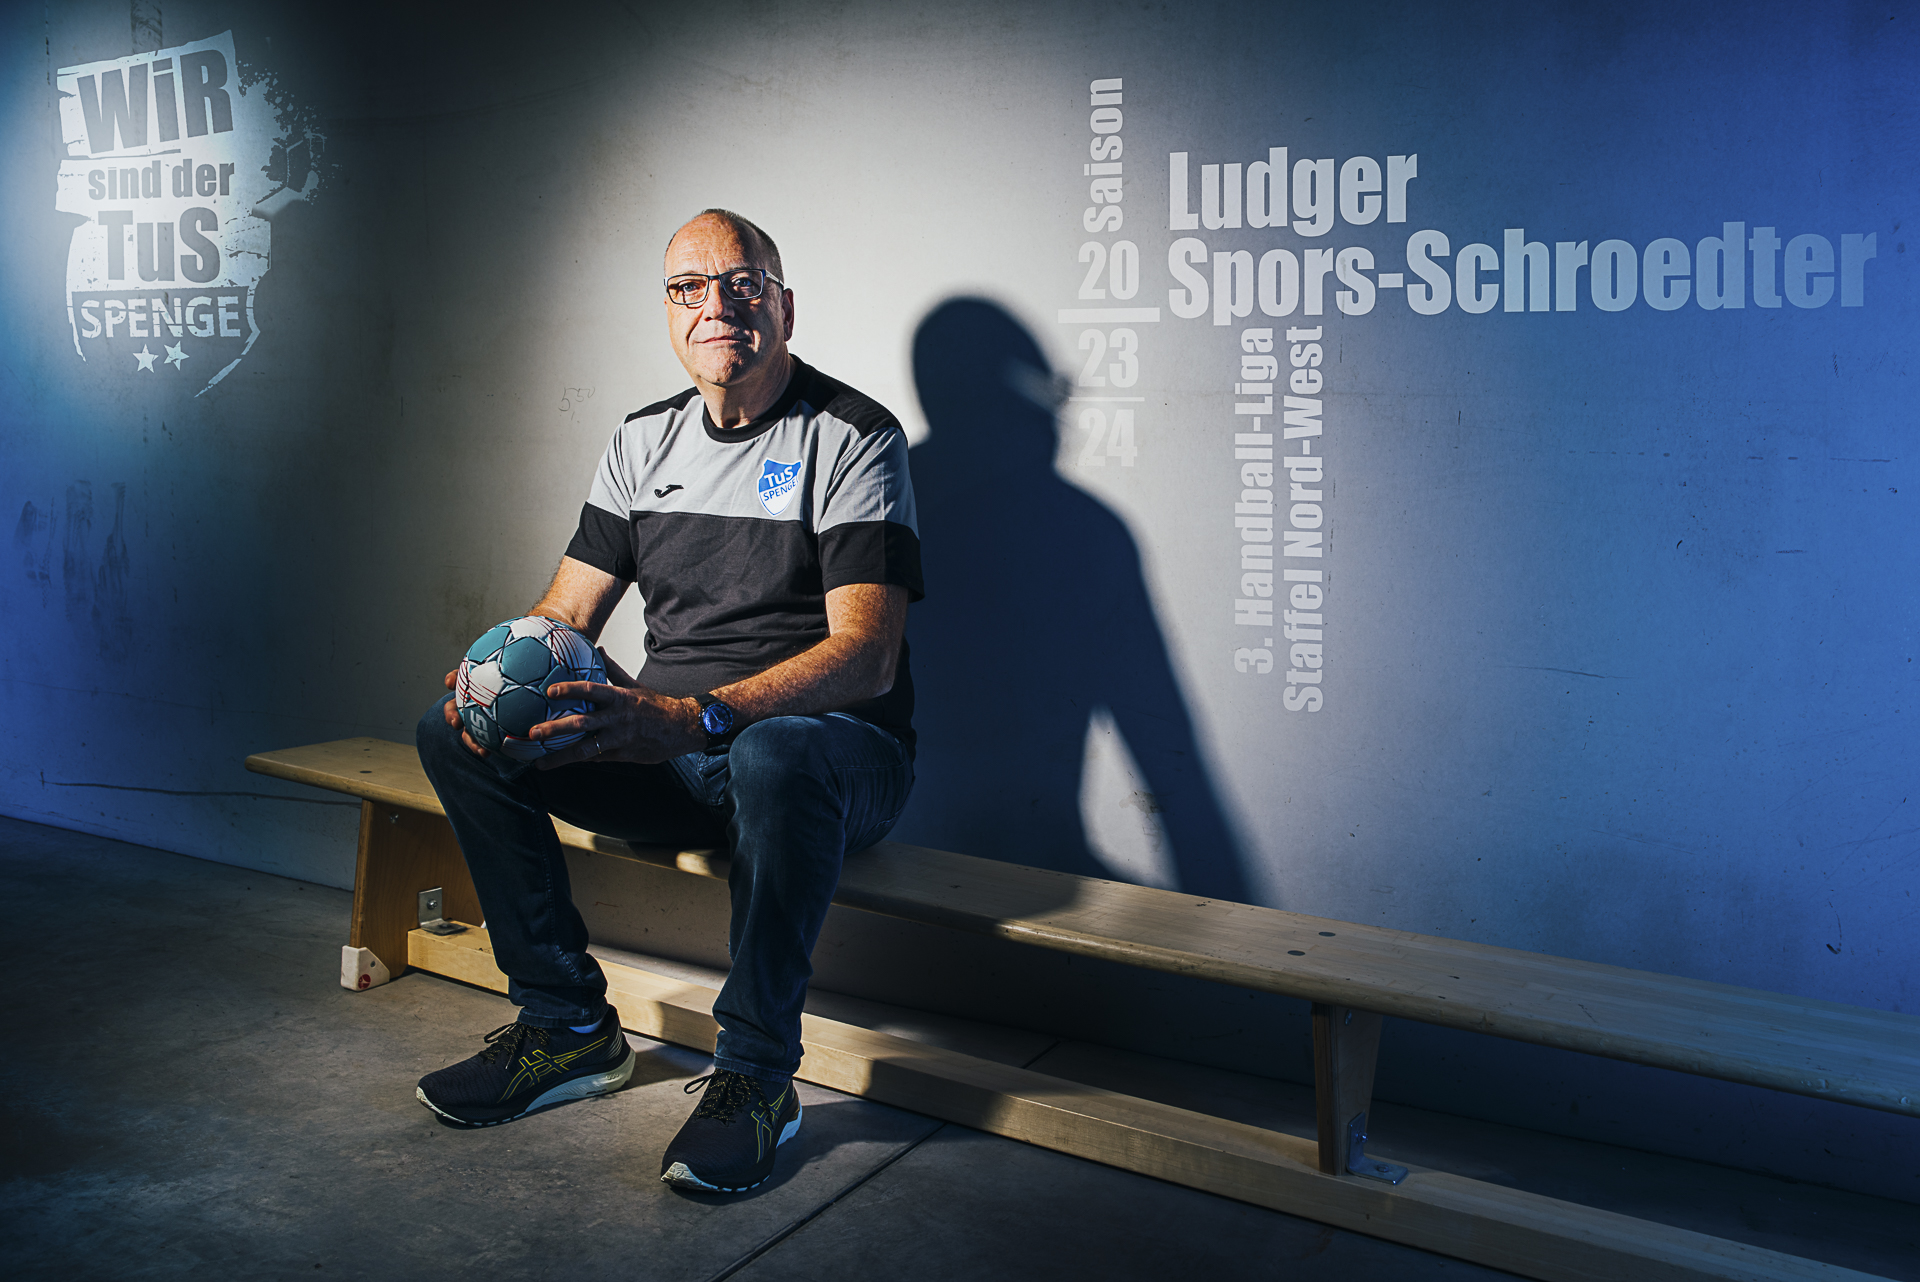 Ludger Spors-Schroedter